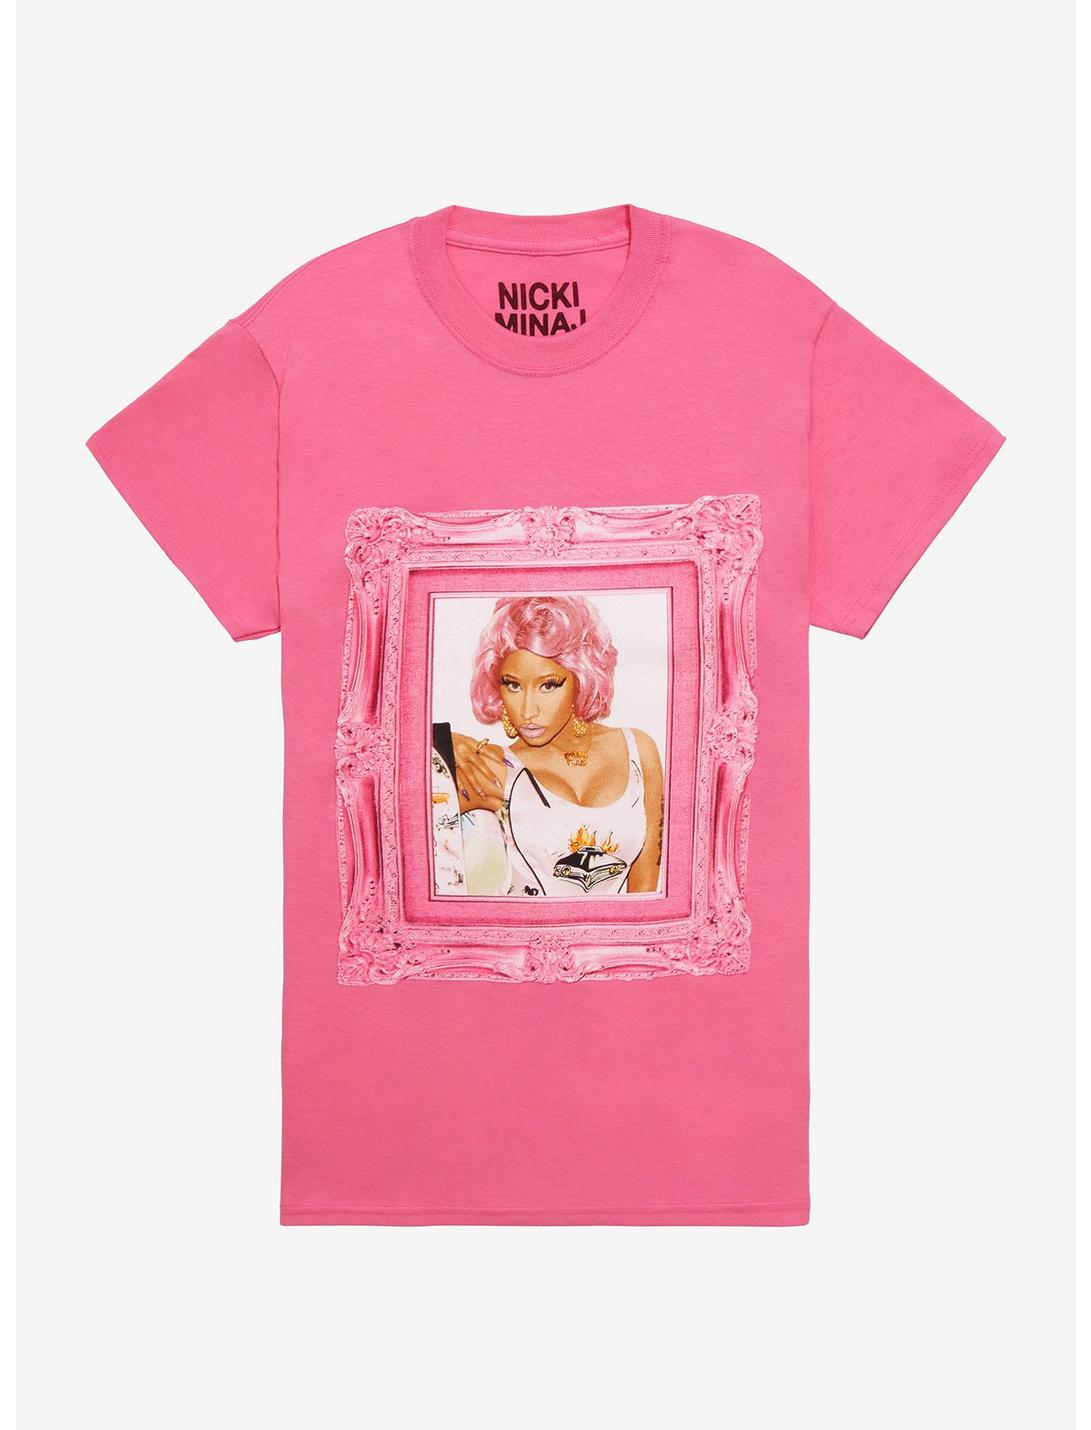 Nicki Minaj Hot Pink Portrait Boyfriend Fit Girls T-Shirt, PINK, hi-res